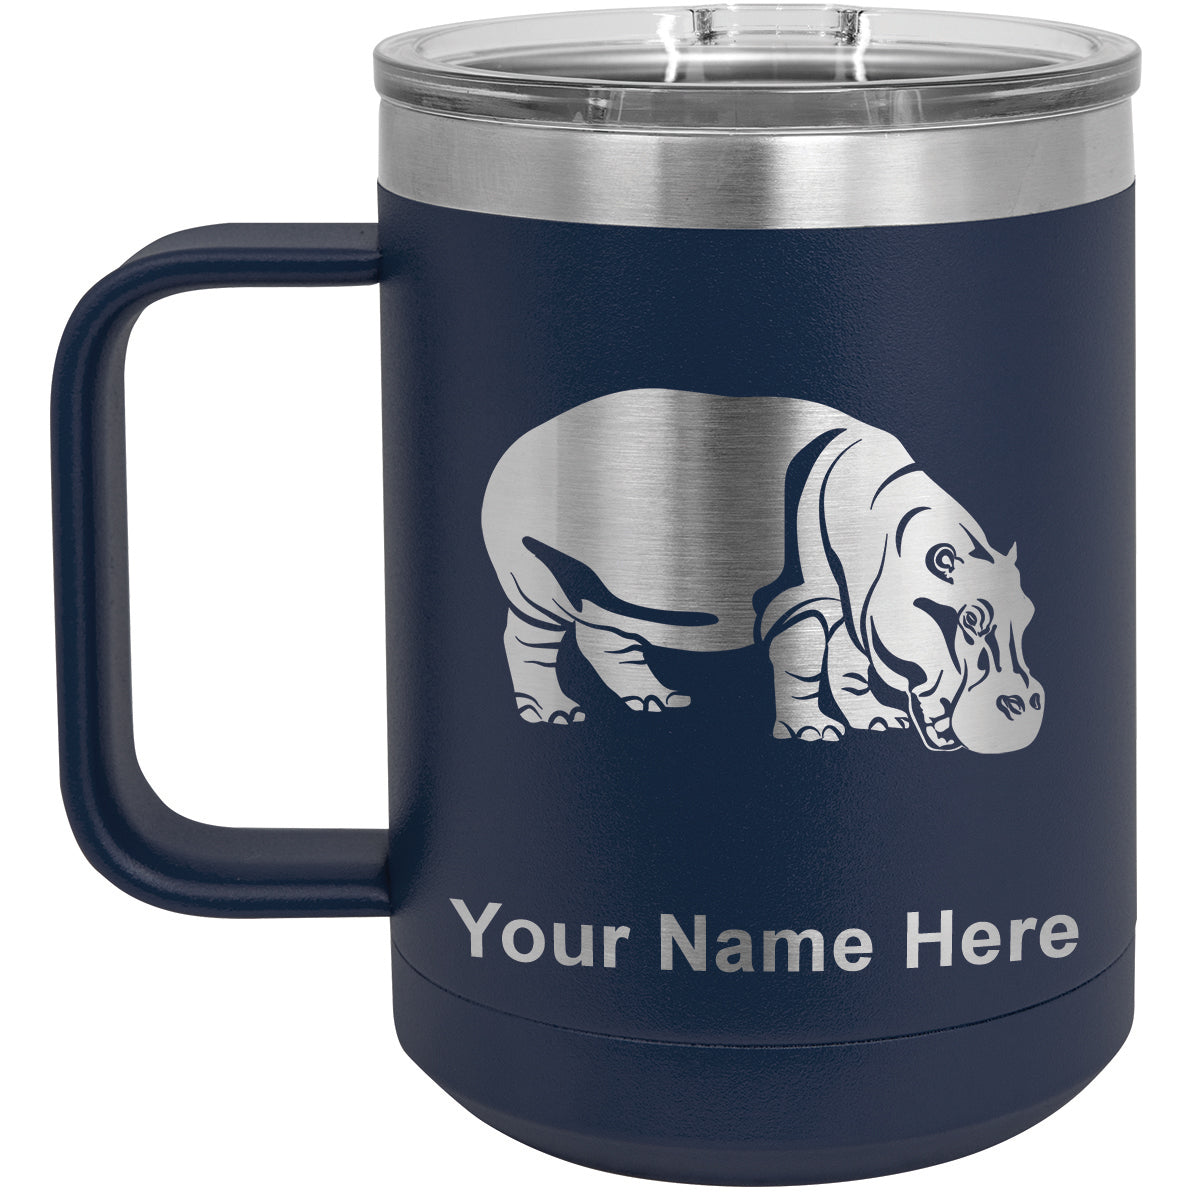 15oz Vacuum Insulated Coffee Mug, Hippopotamus, Personalized Engraving Included